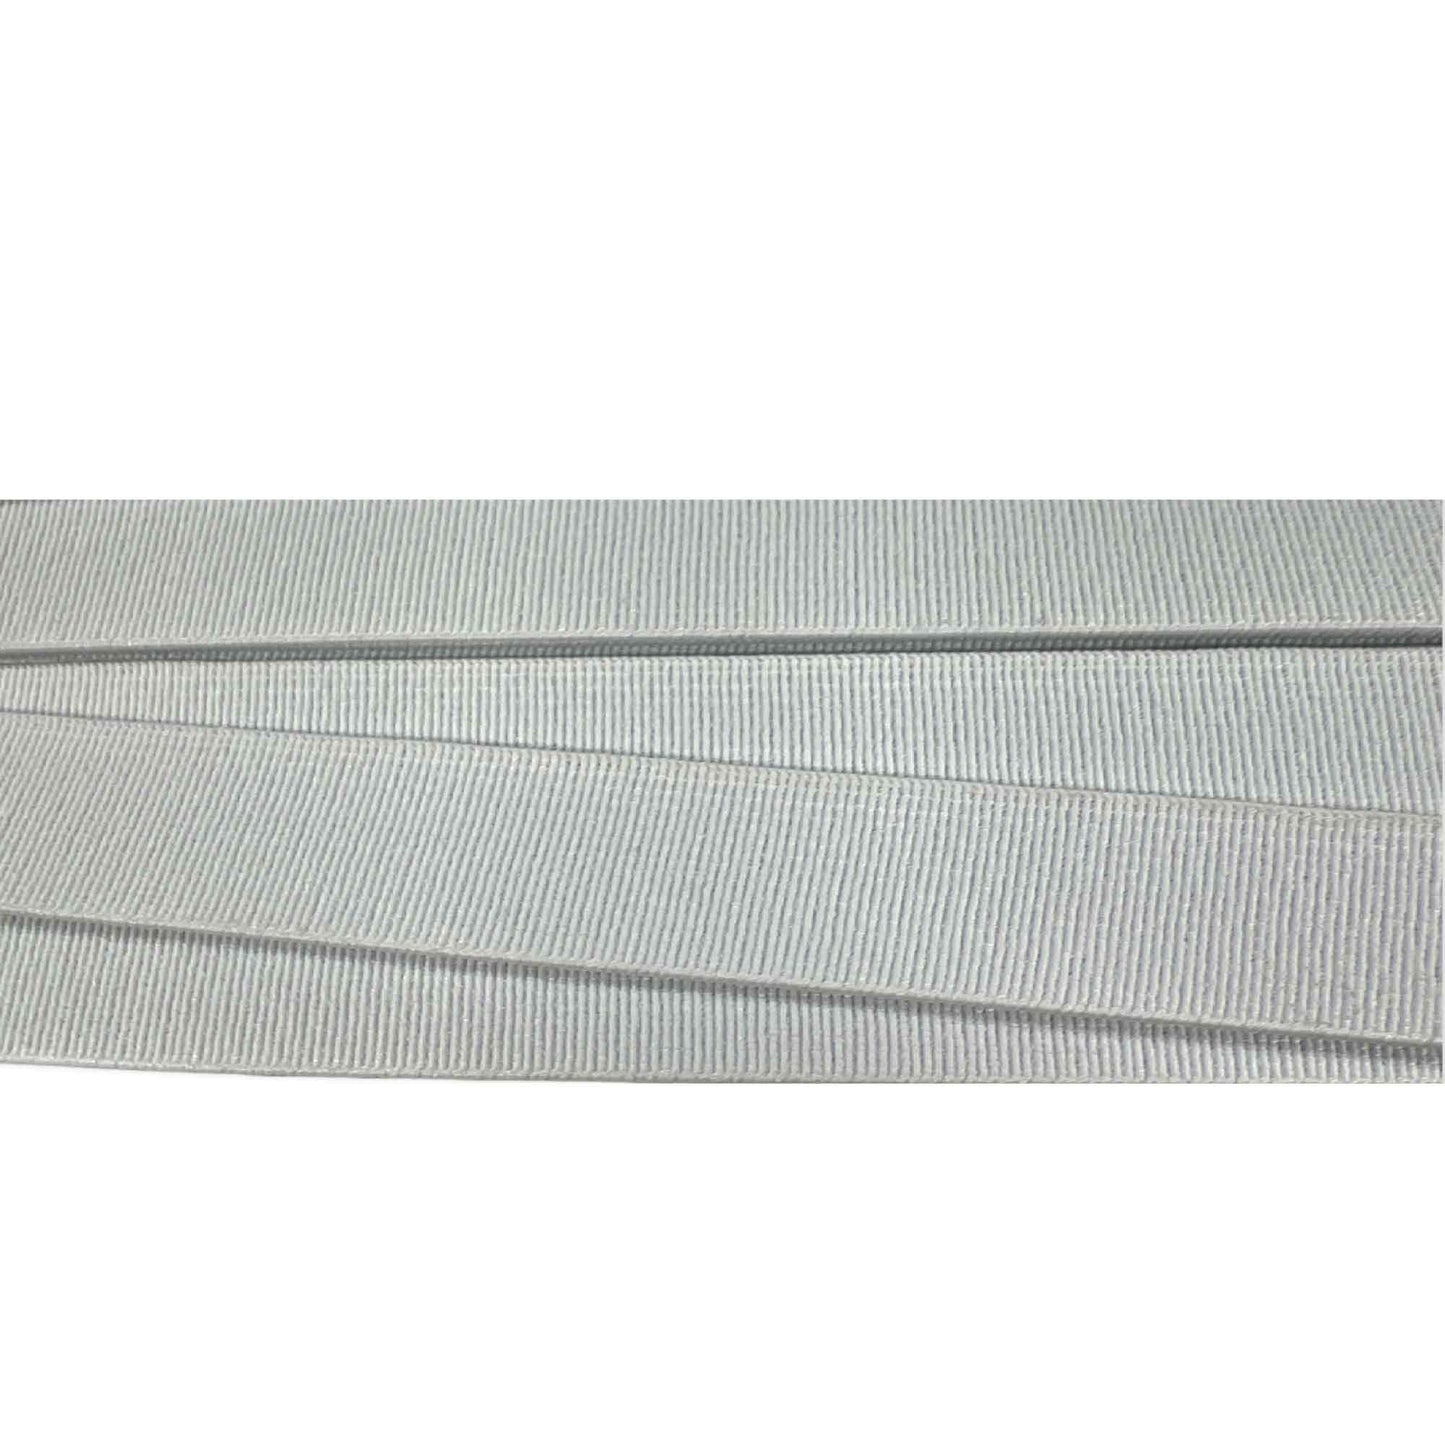 White High Density Elastic Roll 40m - Birch Sewing Fabric Polyester Craft DIY